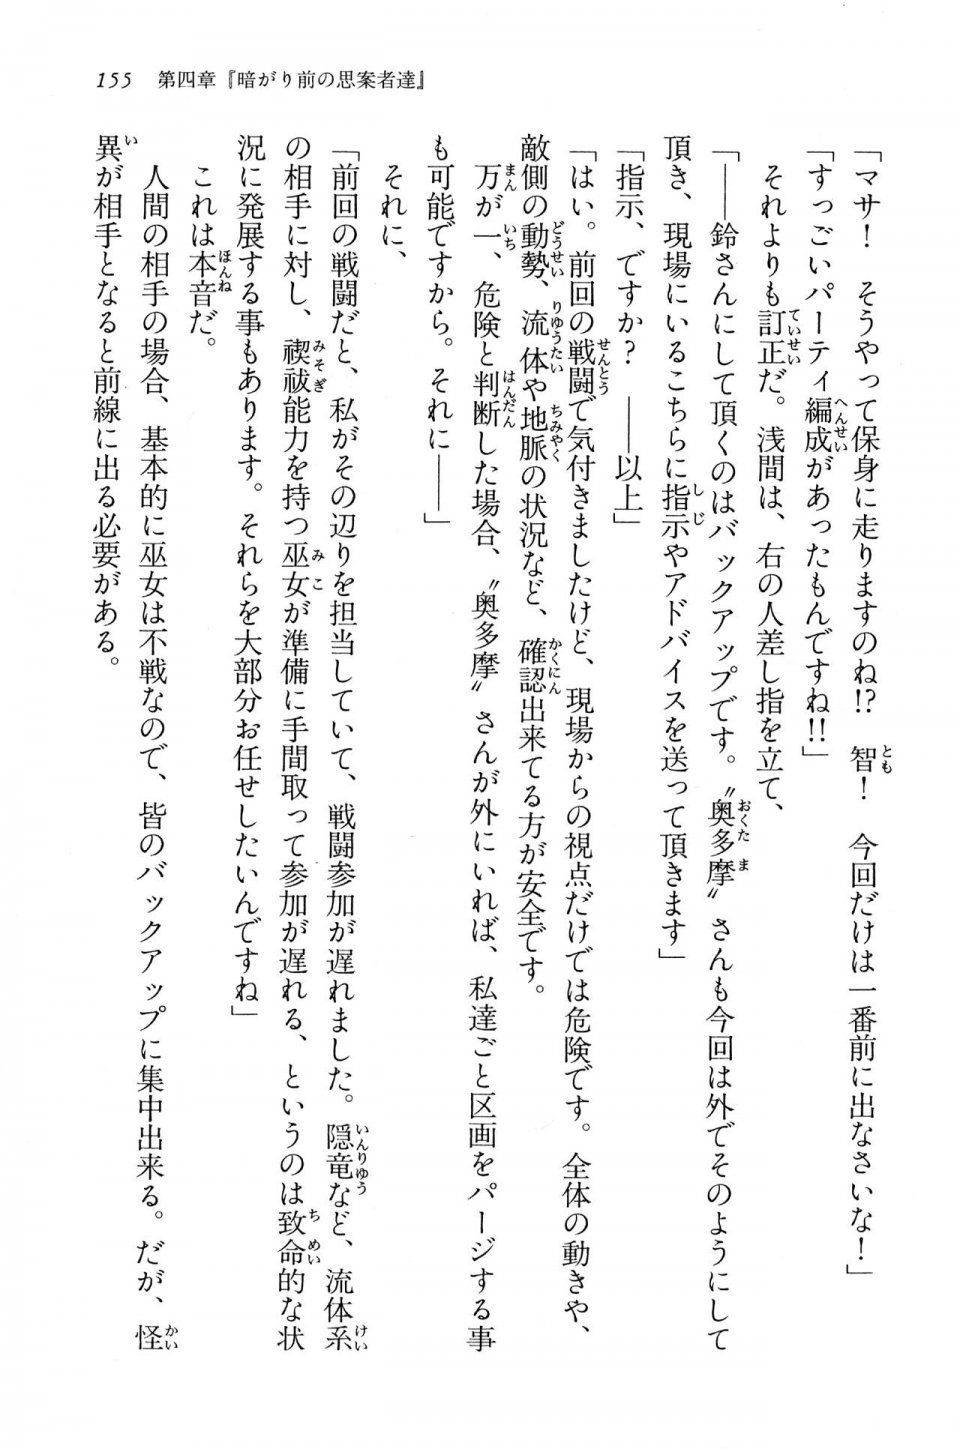 Kyoukai Senjou no Horizon BD Special Mininovel Vol 5(3A) - Photo #159